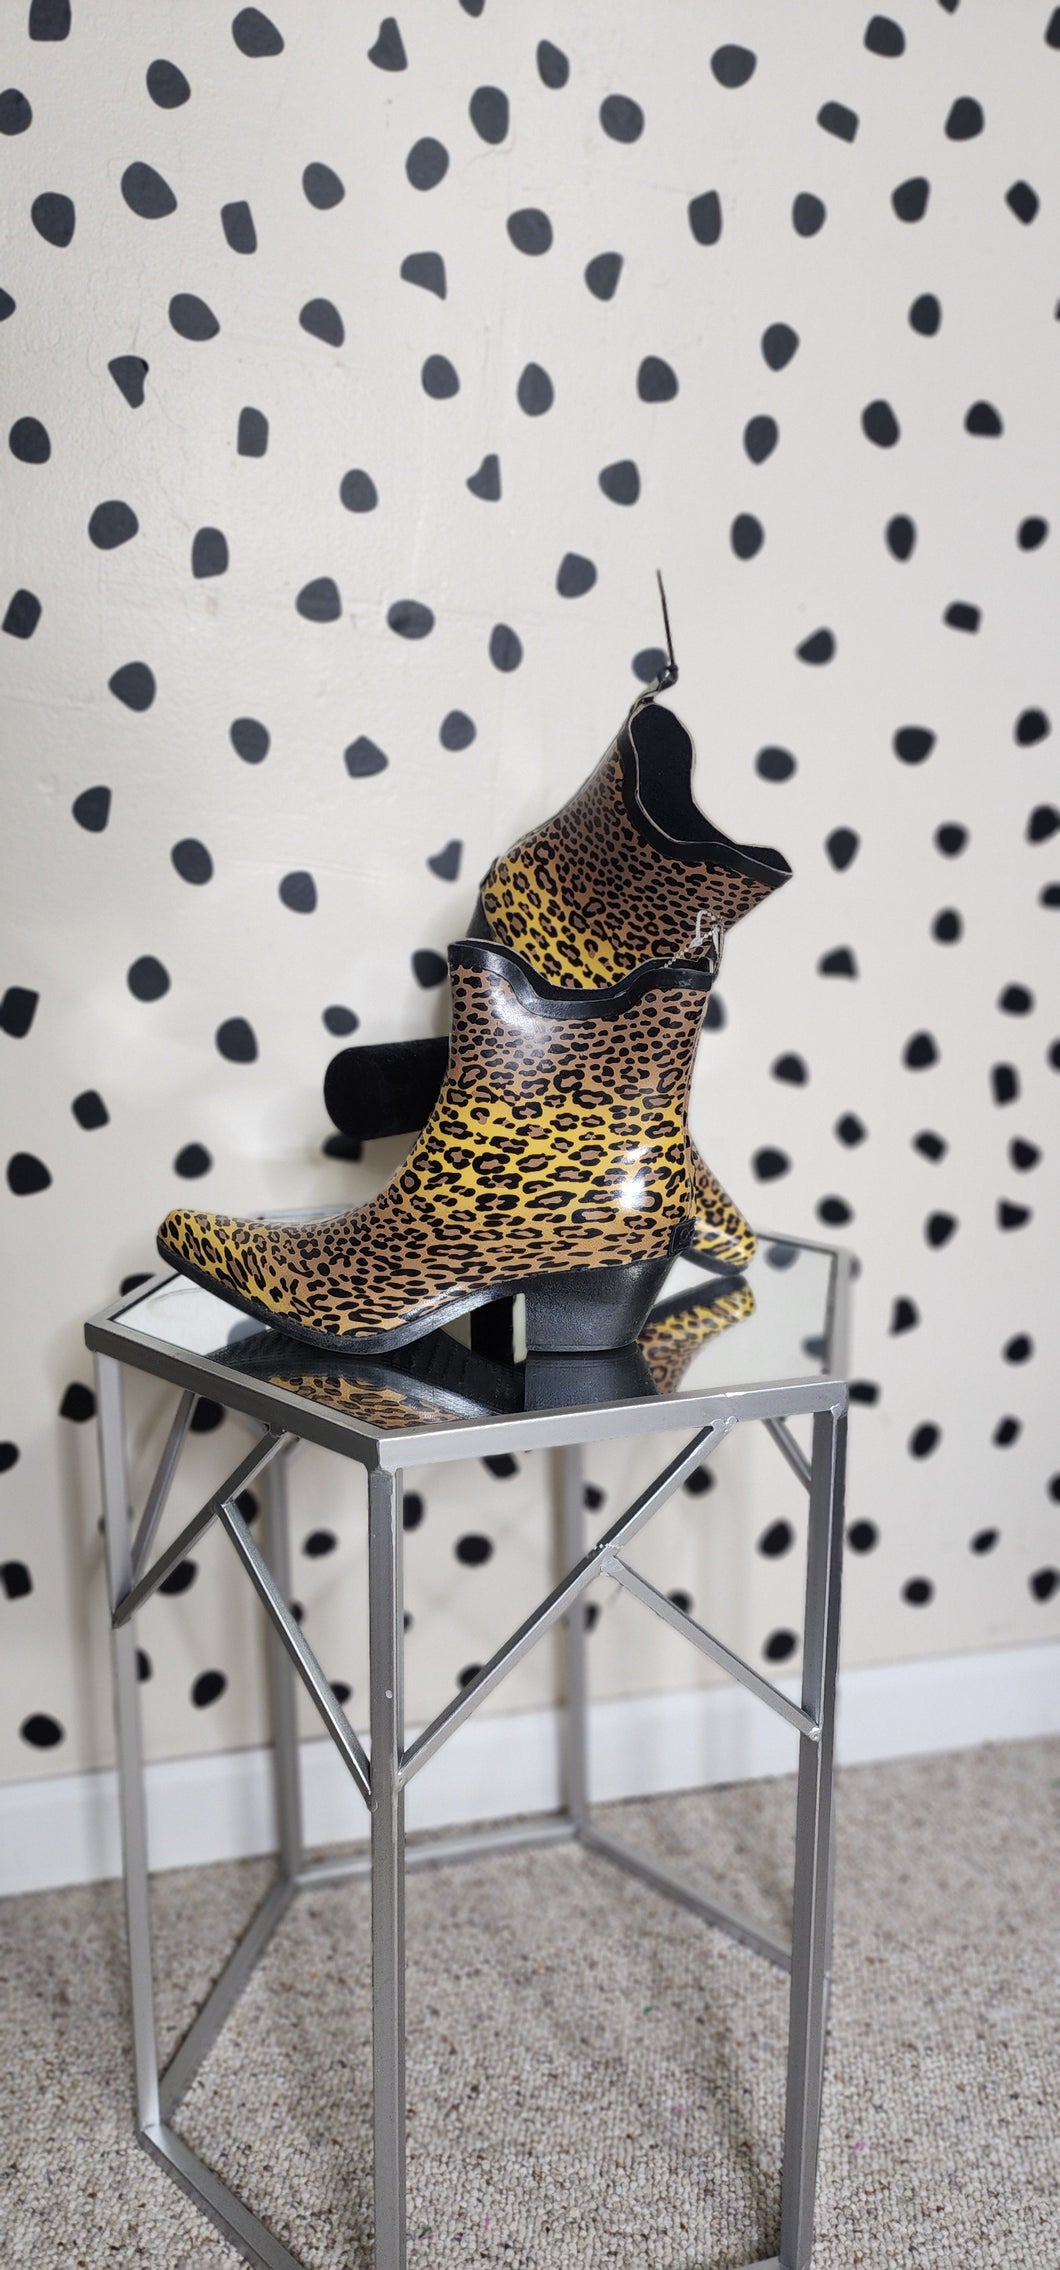 Corkys leopard rubber booties   sz 10